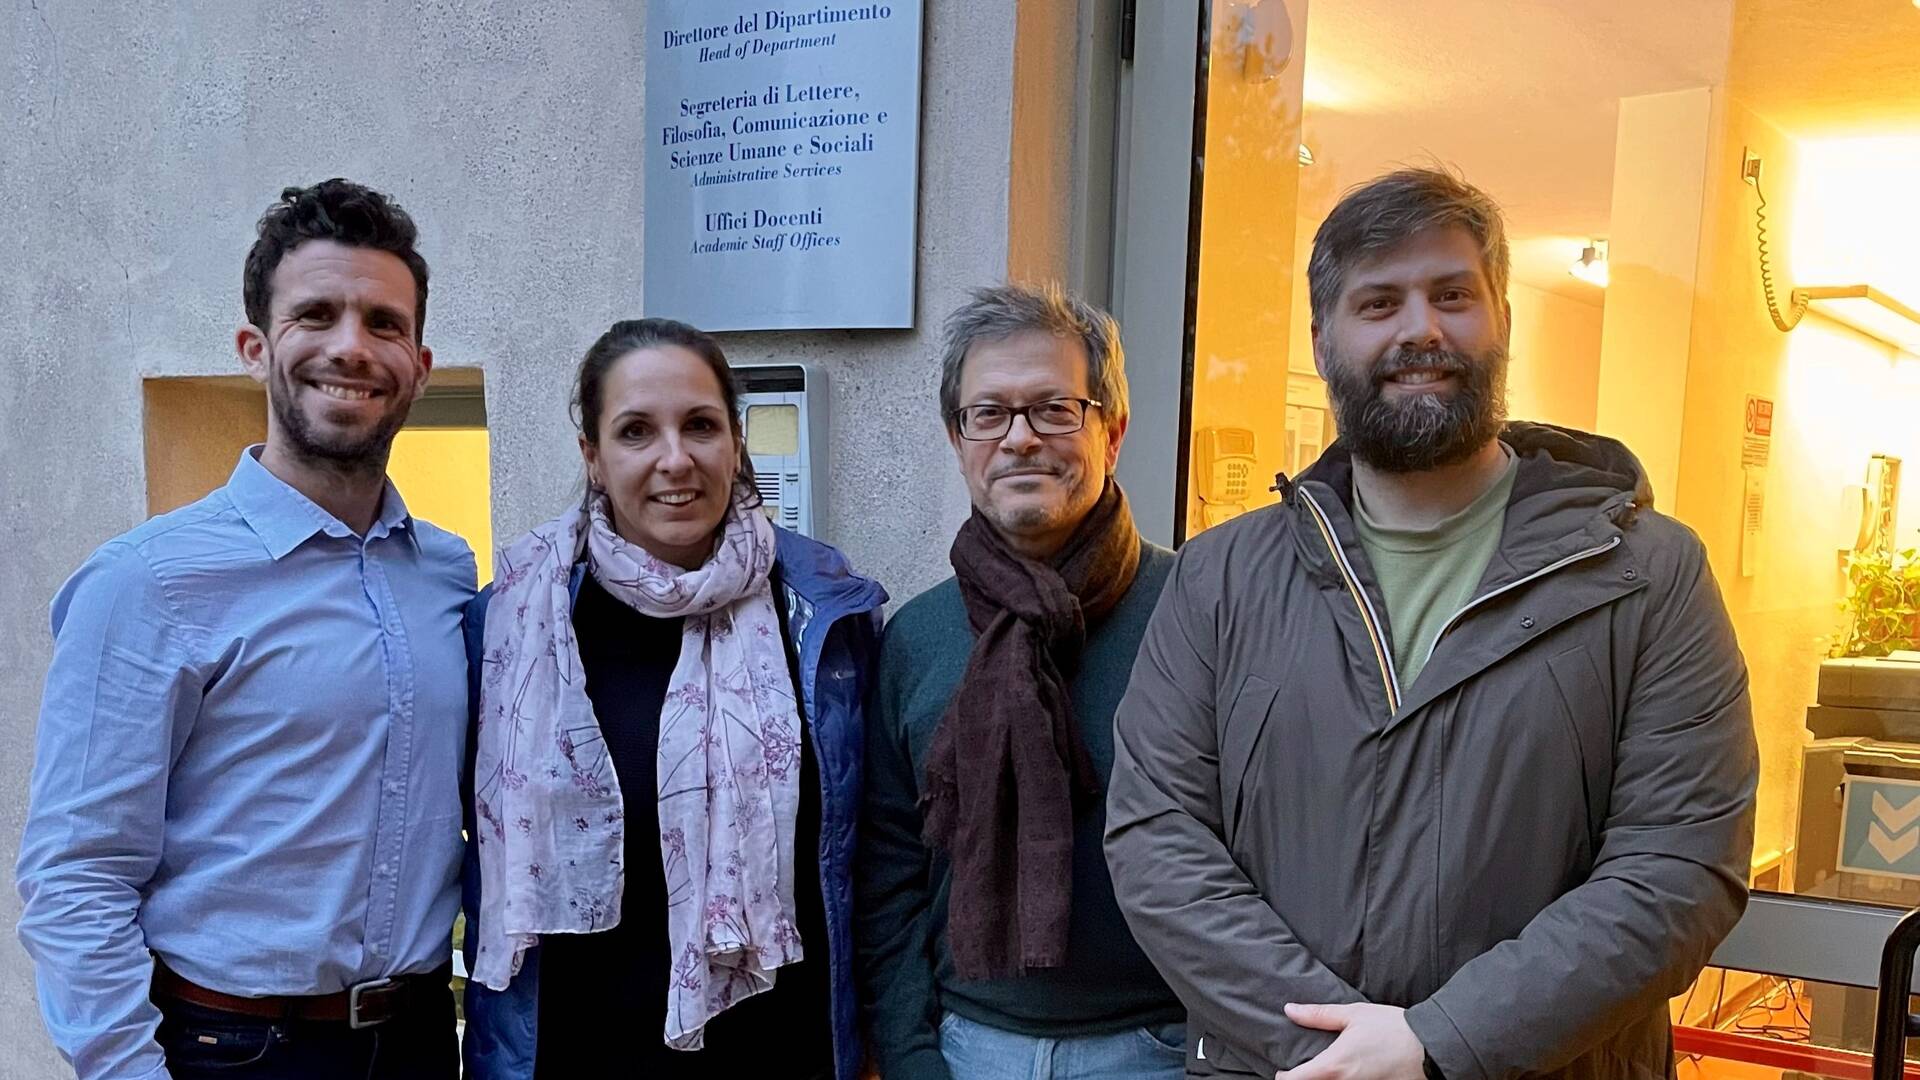 HUSS delegation pays visit to the University of Bergamo